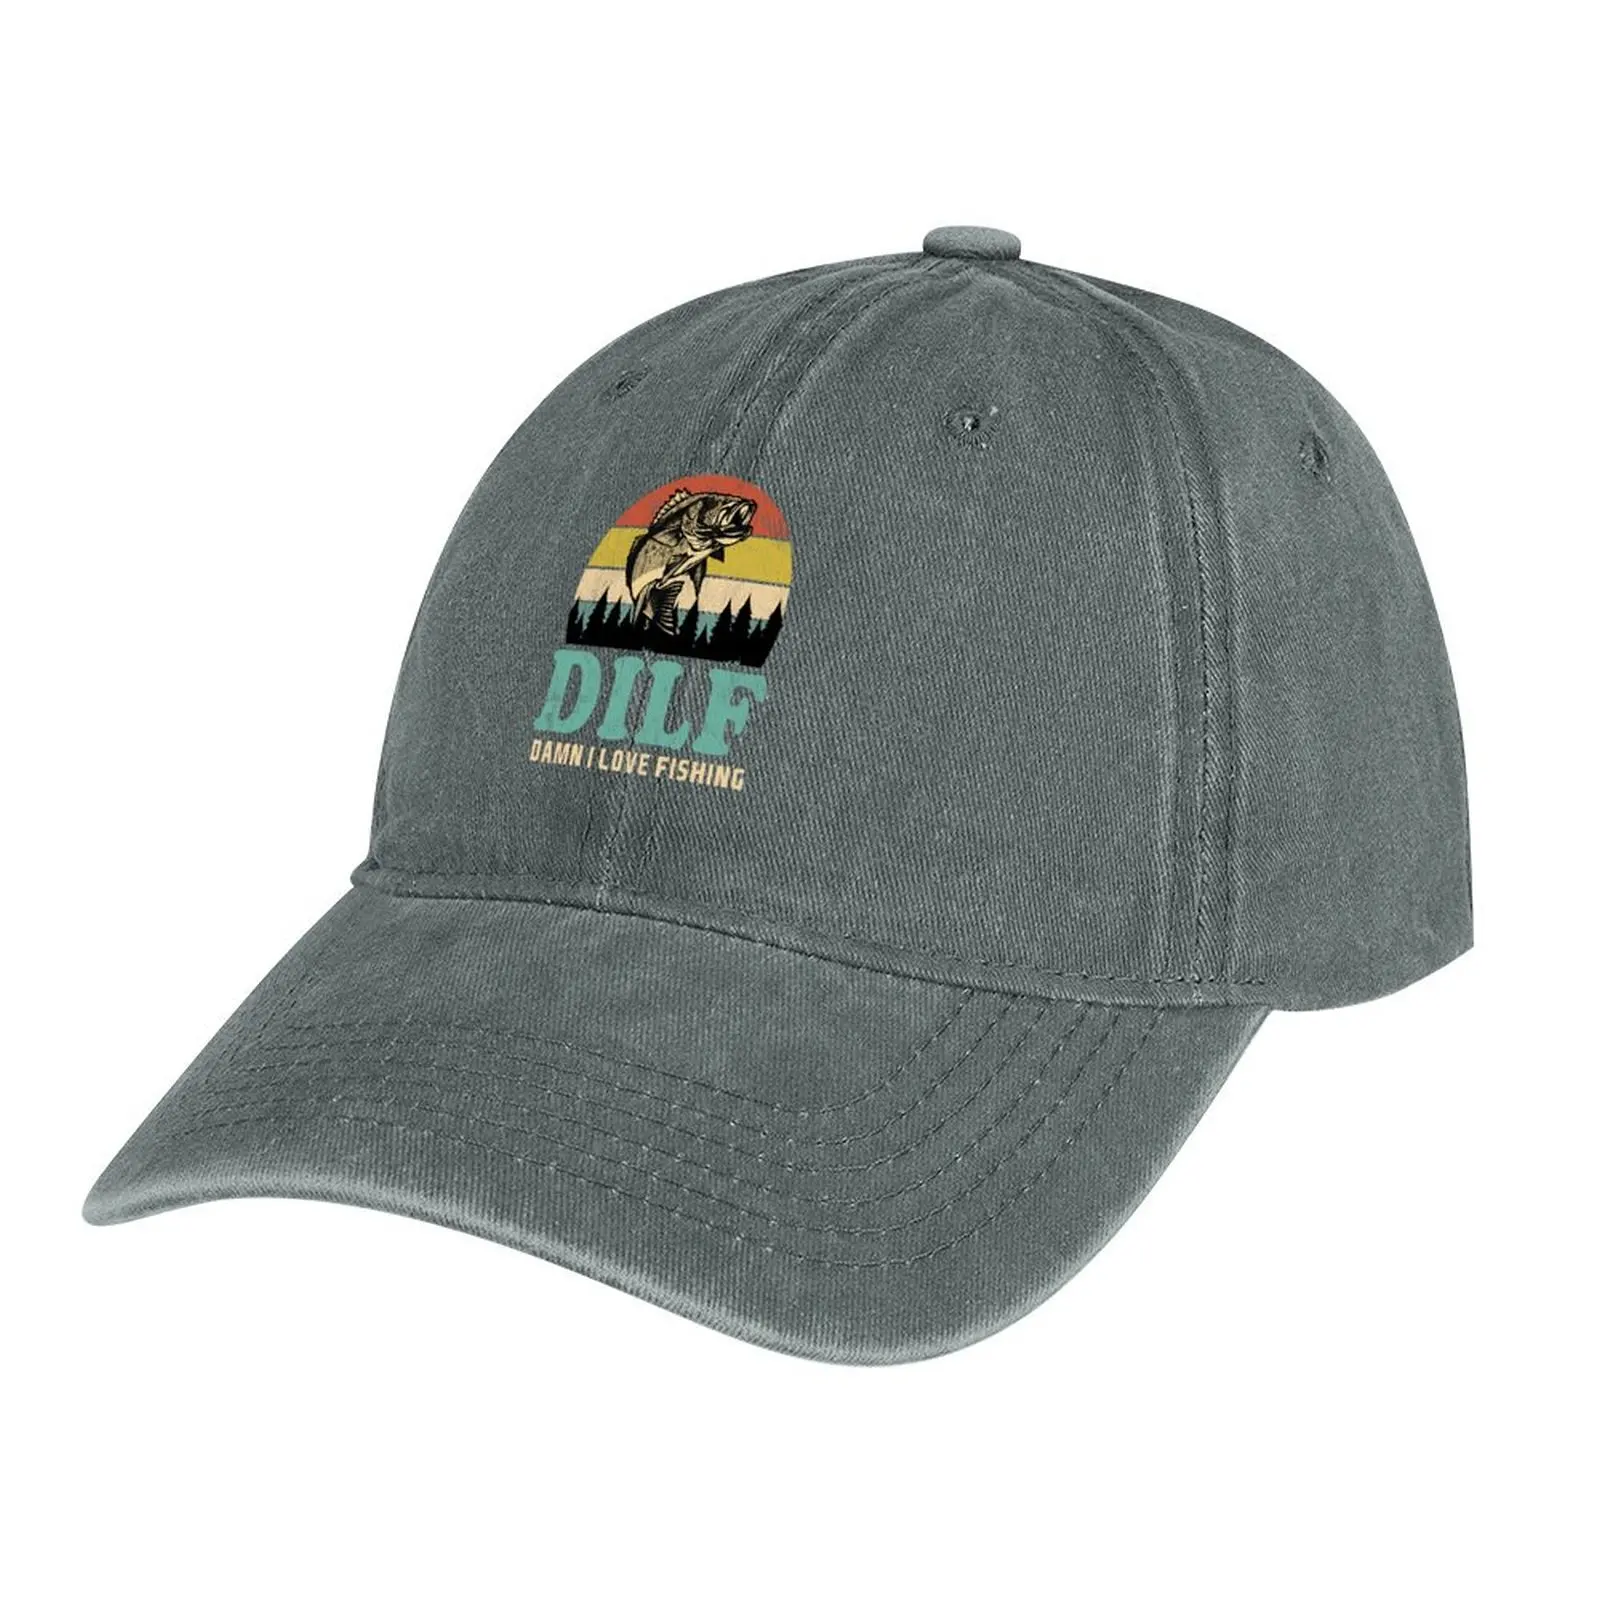 

DILF - Damn I Love Fishing Cowboy Hat Golf Hat Man Military Cap Man Women's Hats For The Sun Men's